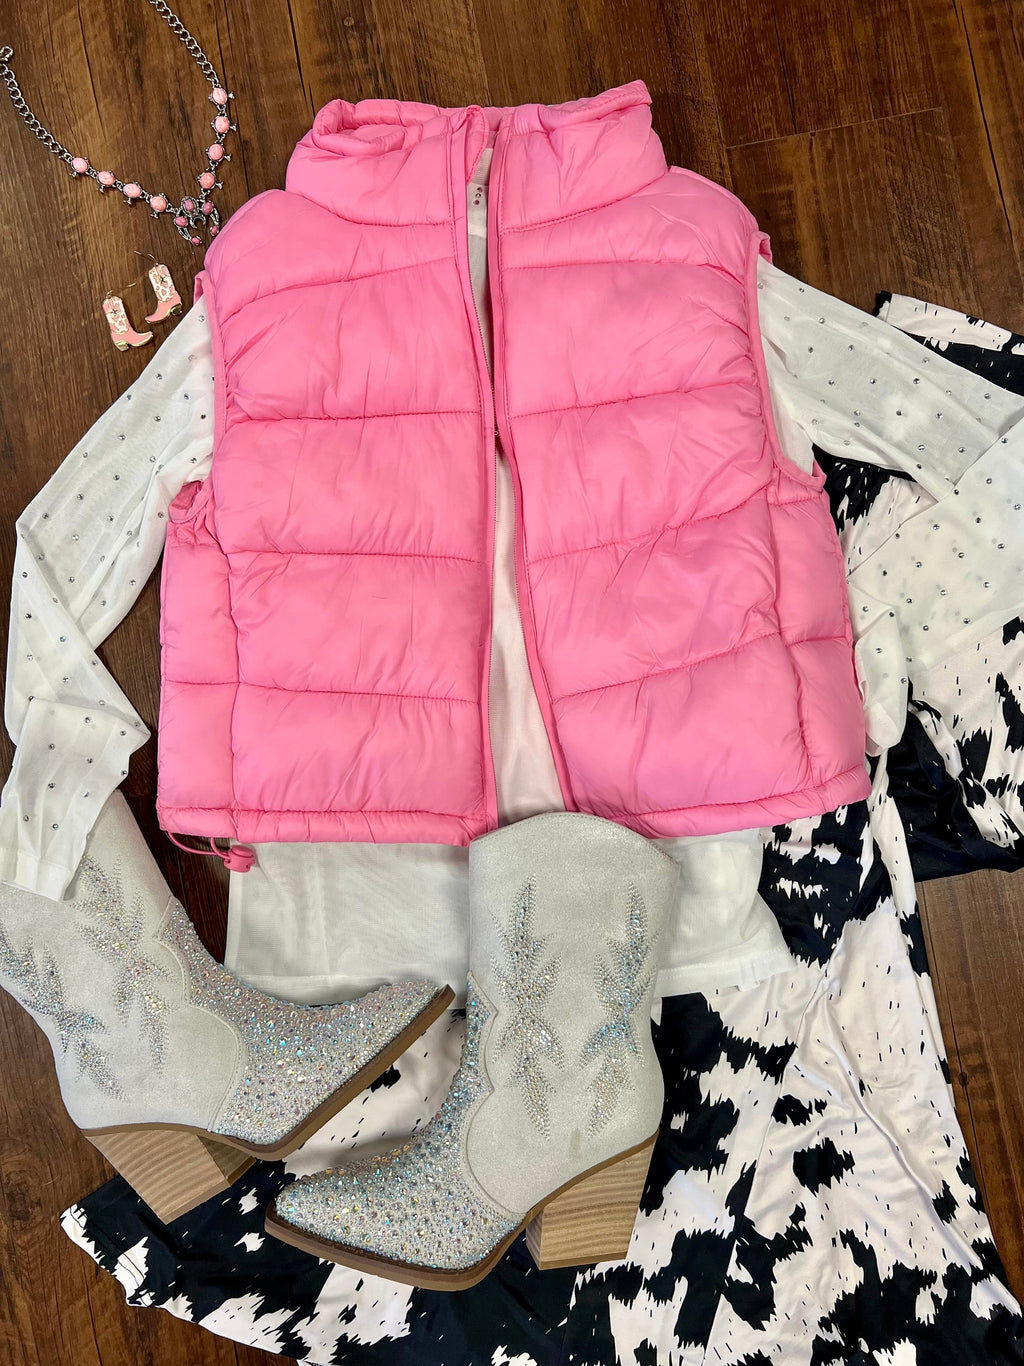 Cotton Candy Pink Puffer Vest* | gussieduponline